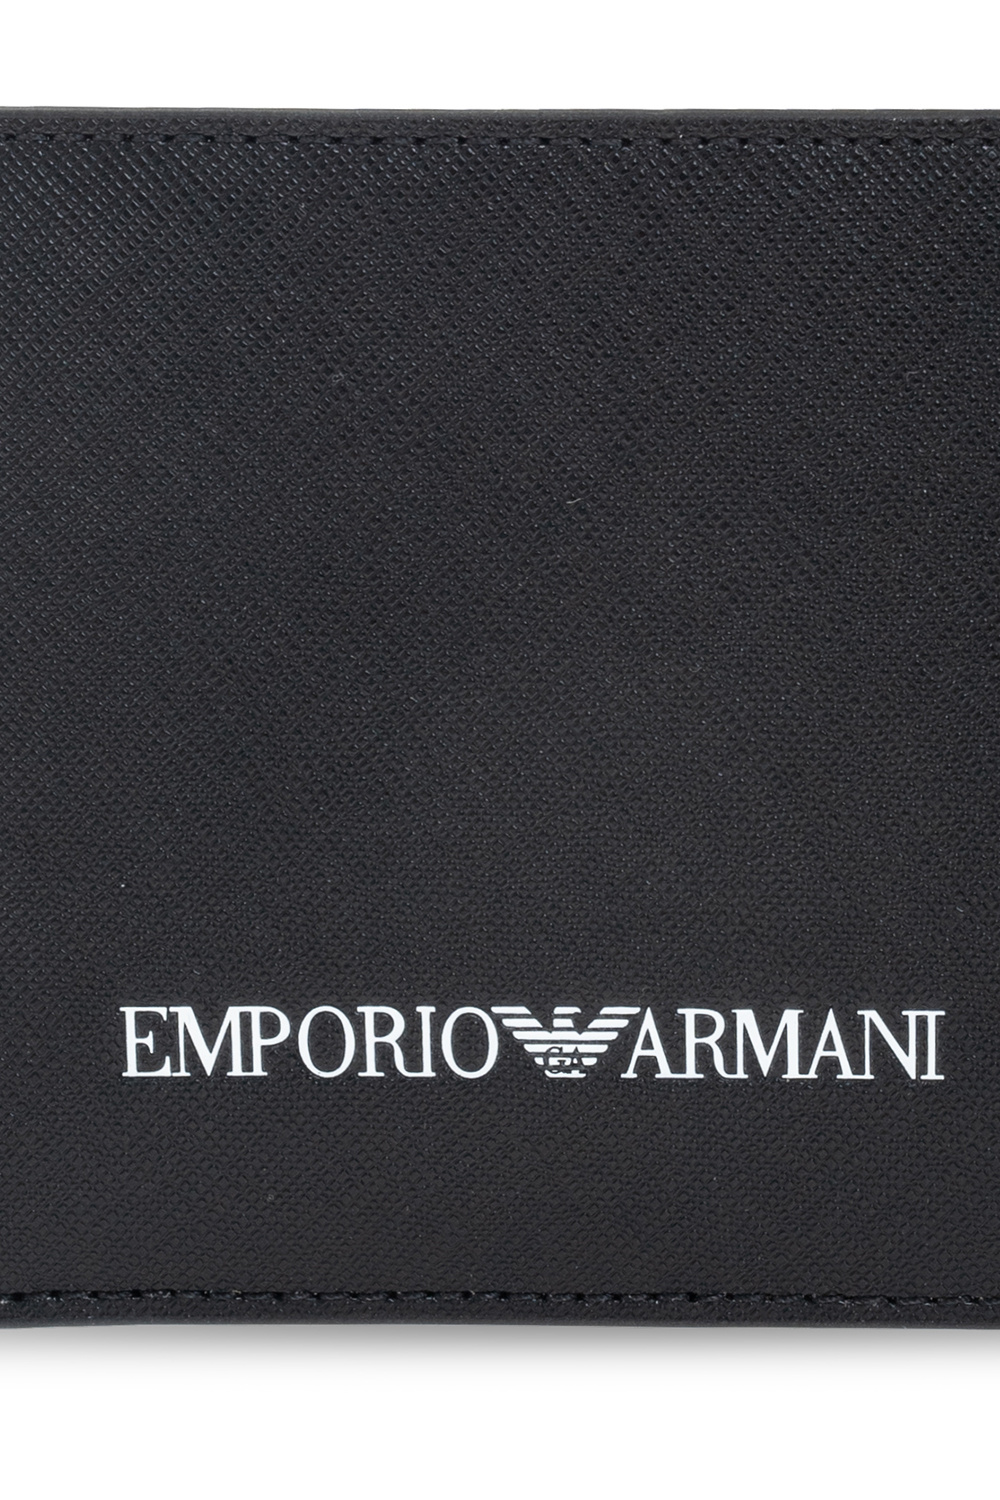 Emporio armani bain Джинсовые юбки Emporio Armani